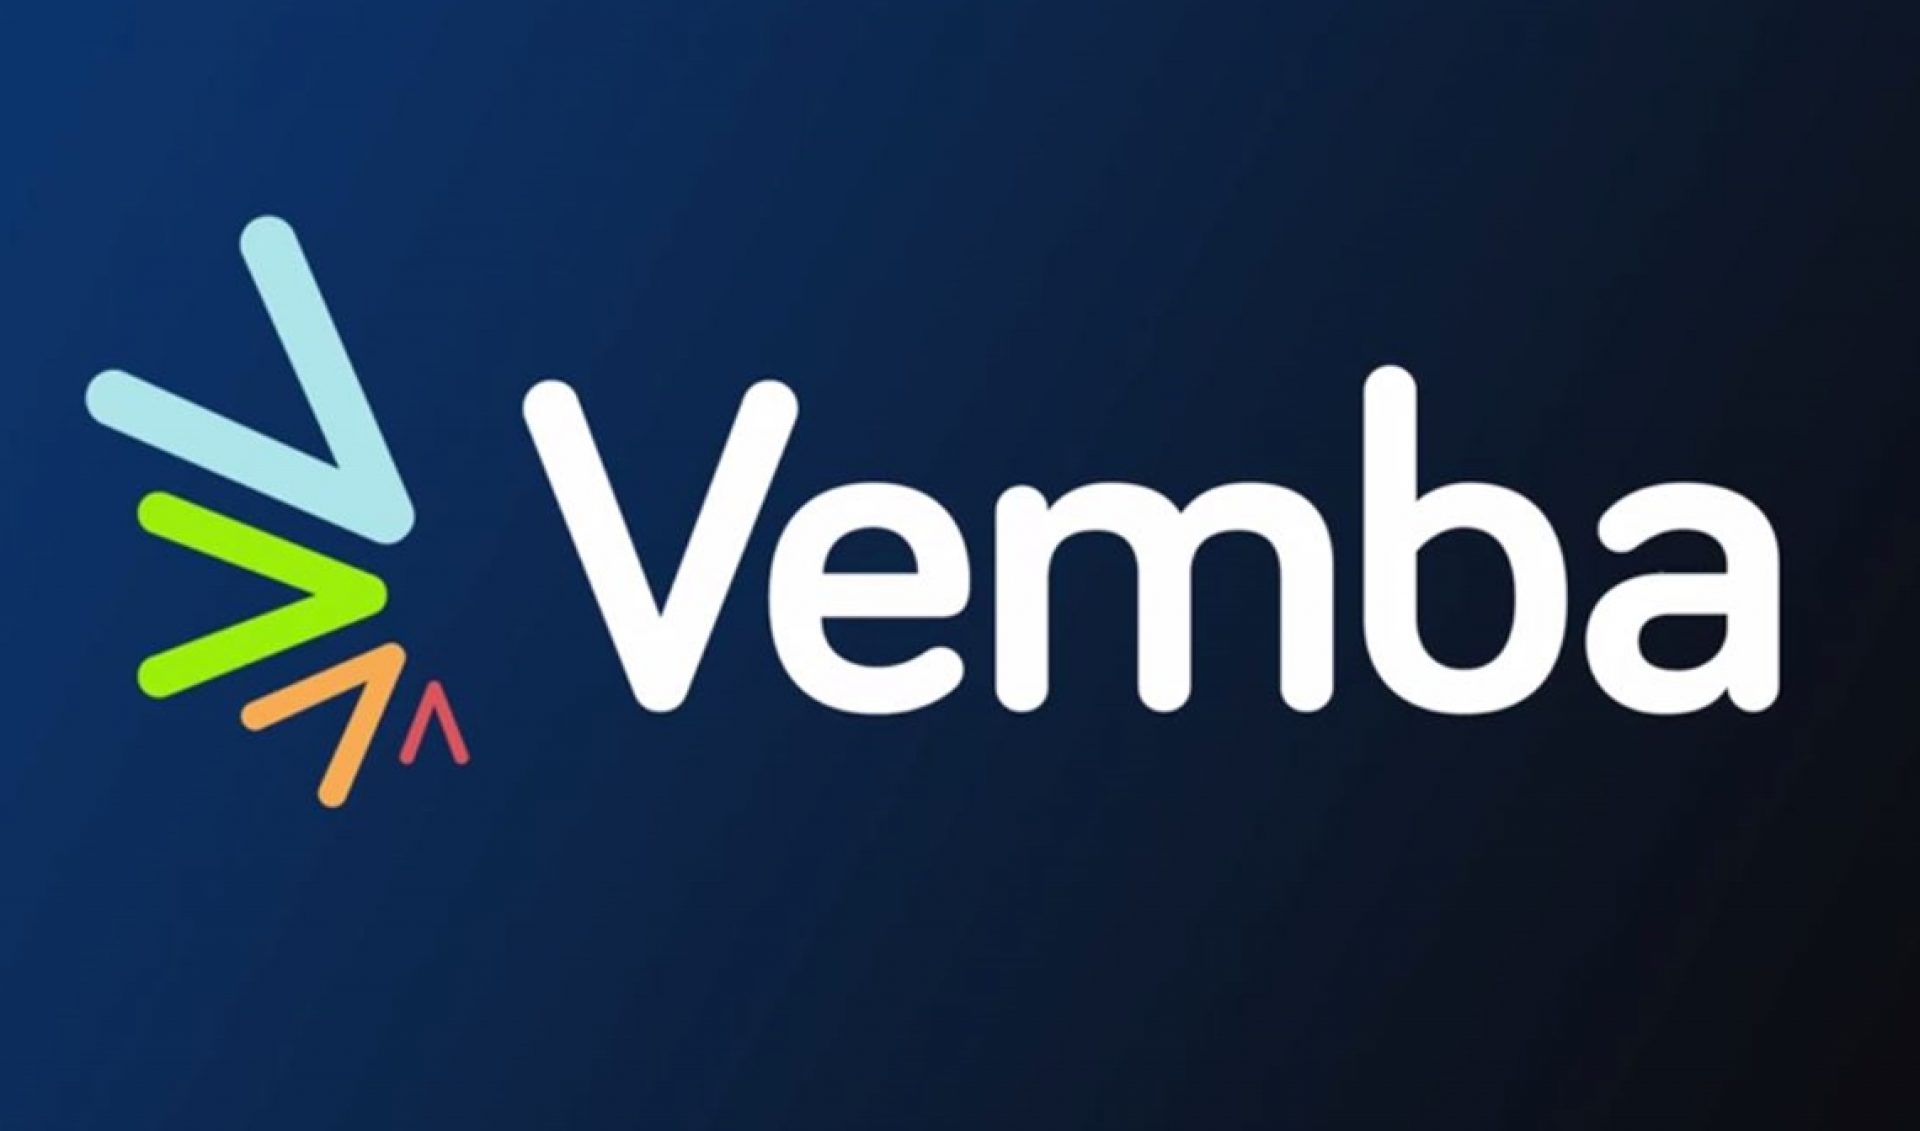 Video Distribution Service Vemba Acquires Social Media Publishing Platform Epoxy